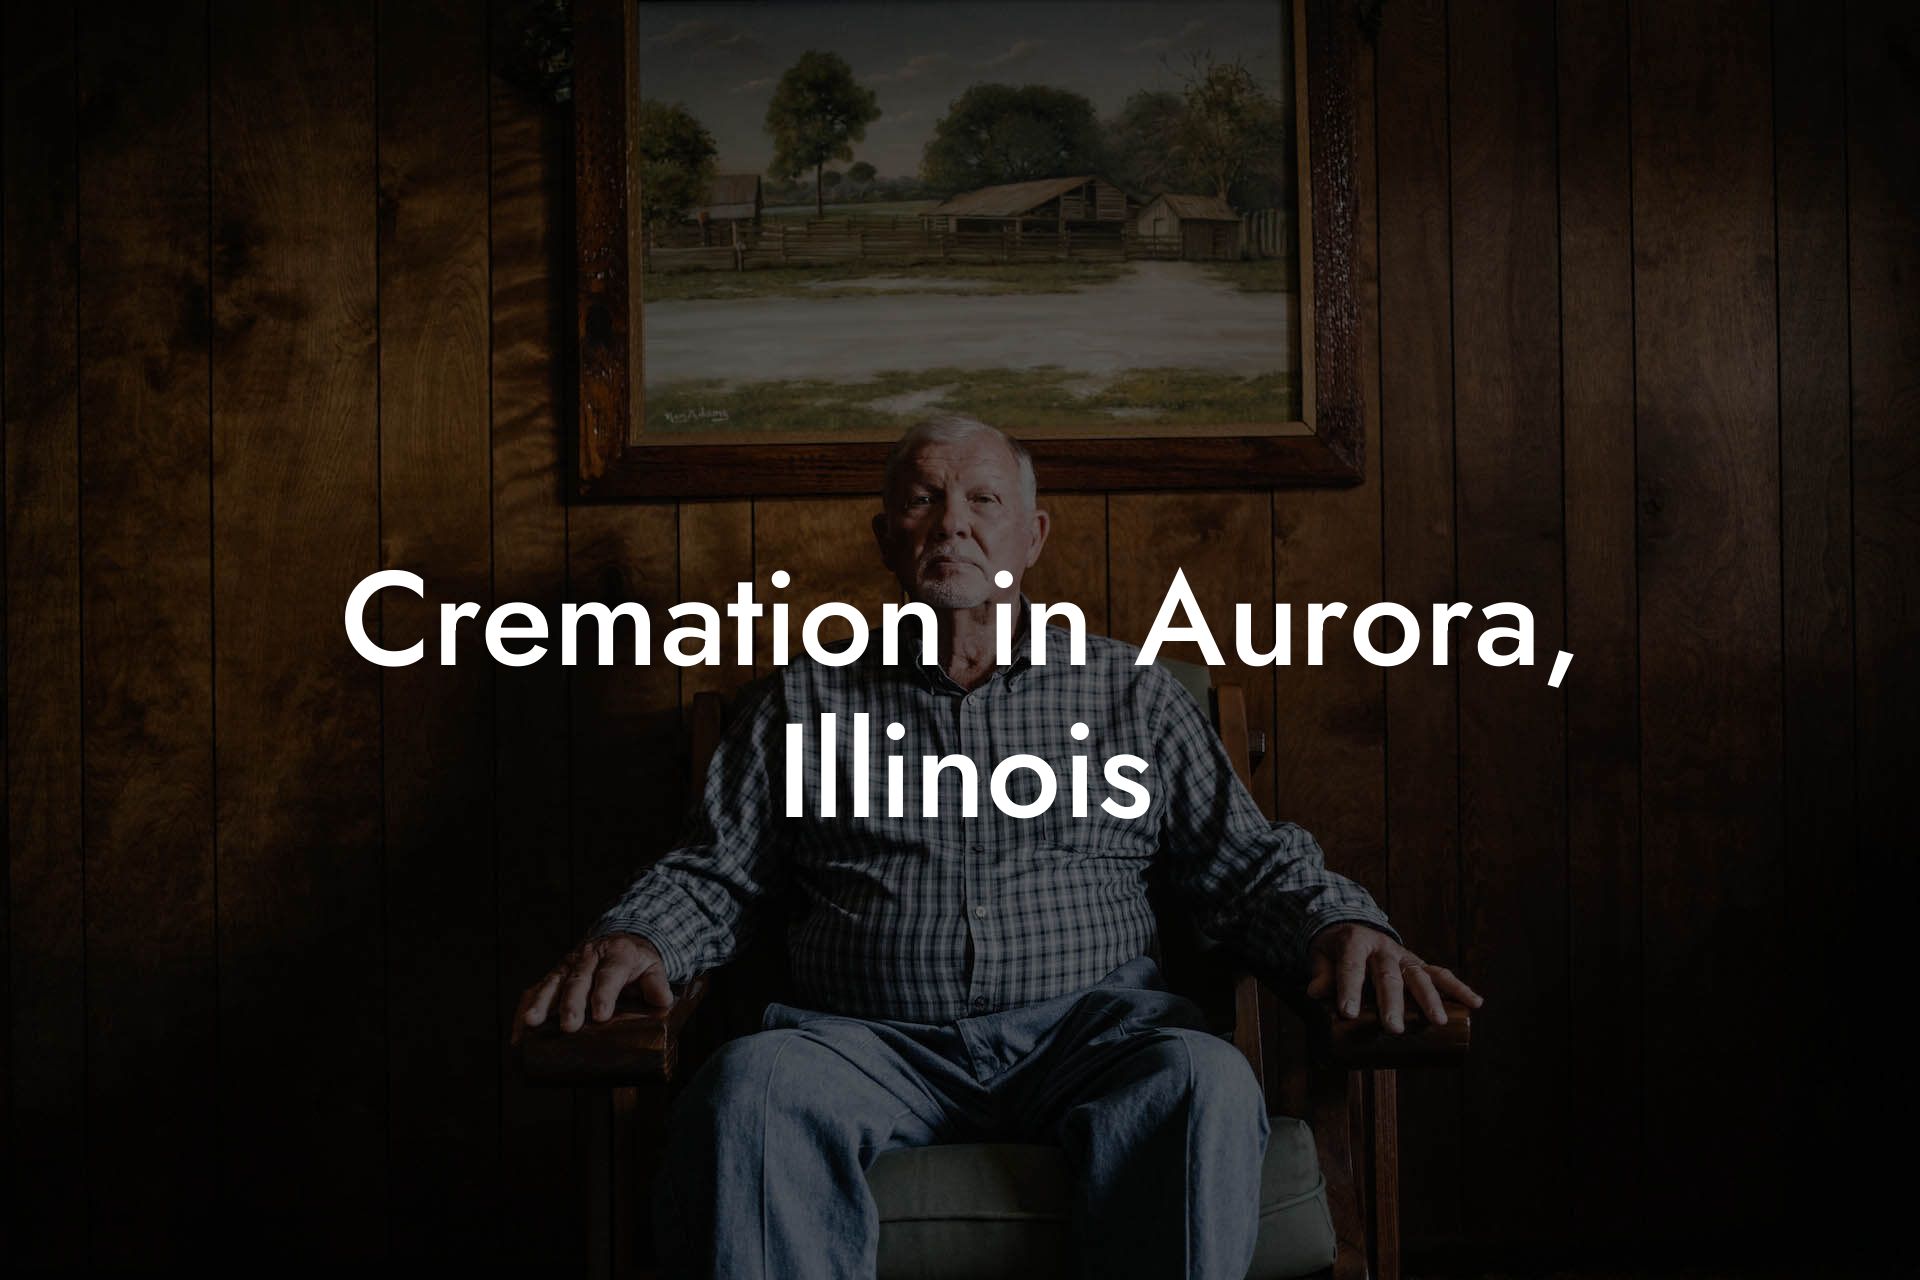 Cremation in Aurora, Illinois